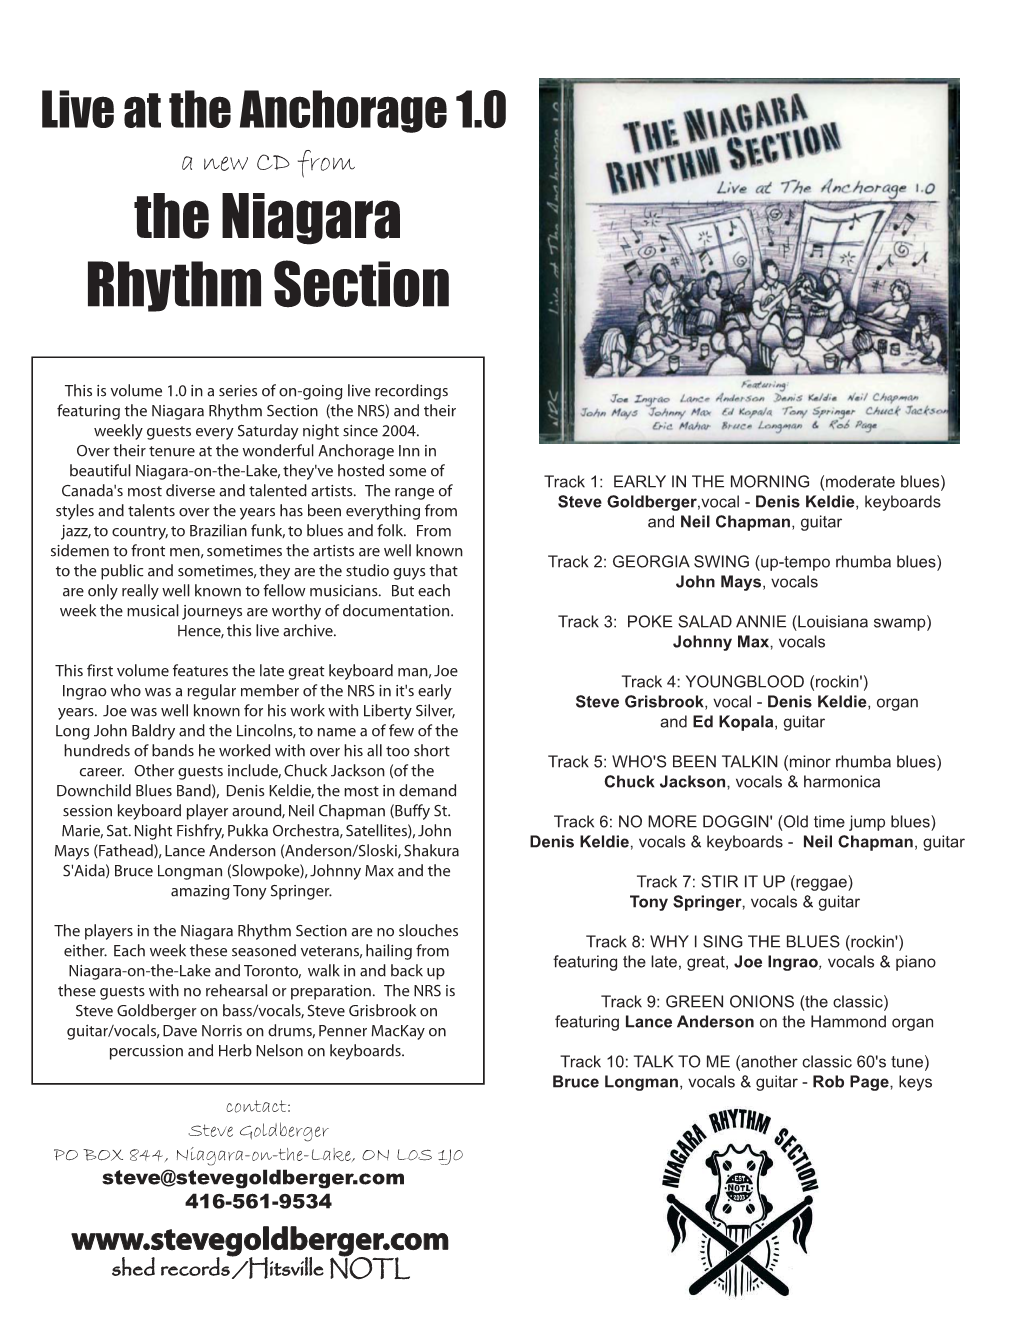 The Niagara Rhythm Section